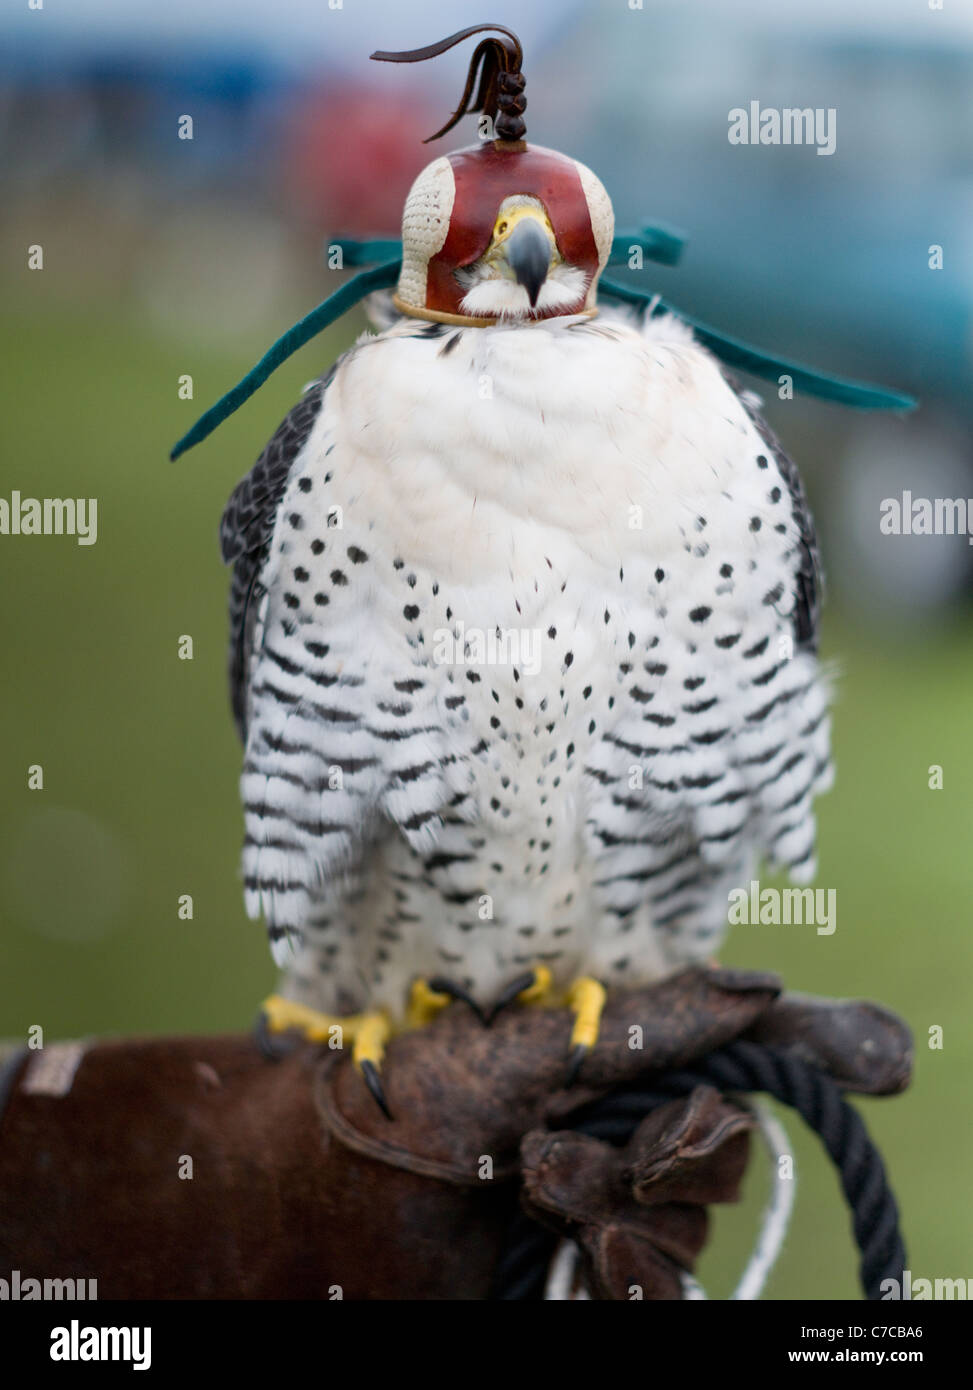 Cheshire Game & Country Fair - la falconeria Falconer: RICHARD NEWTON Bird: Bianco Gyr Falcon x Falco Pellegrino croce ibrido Foto Stock